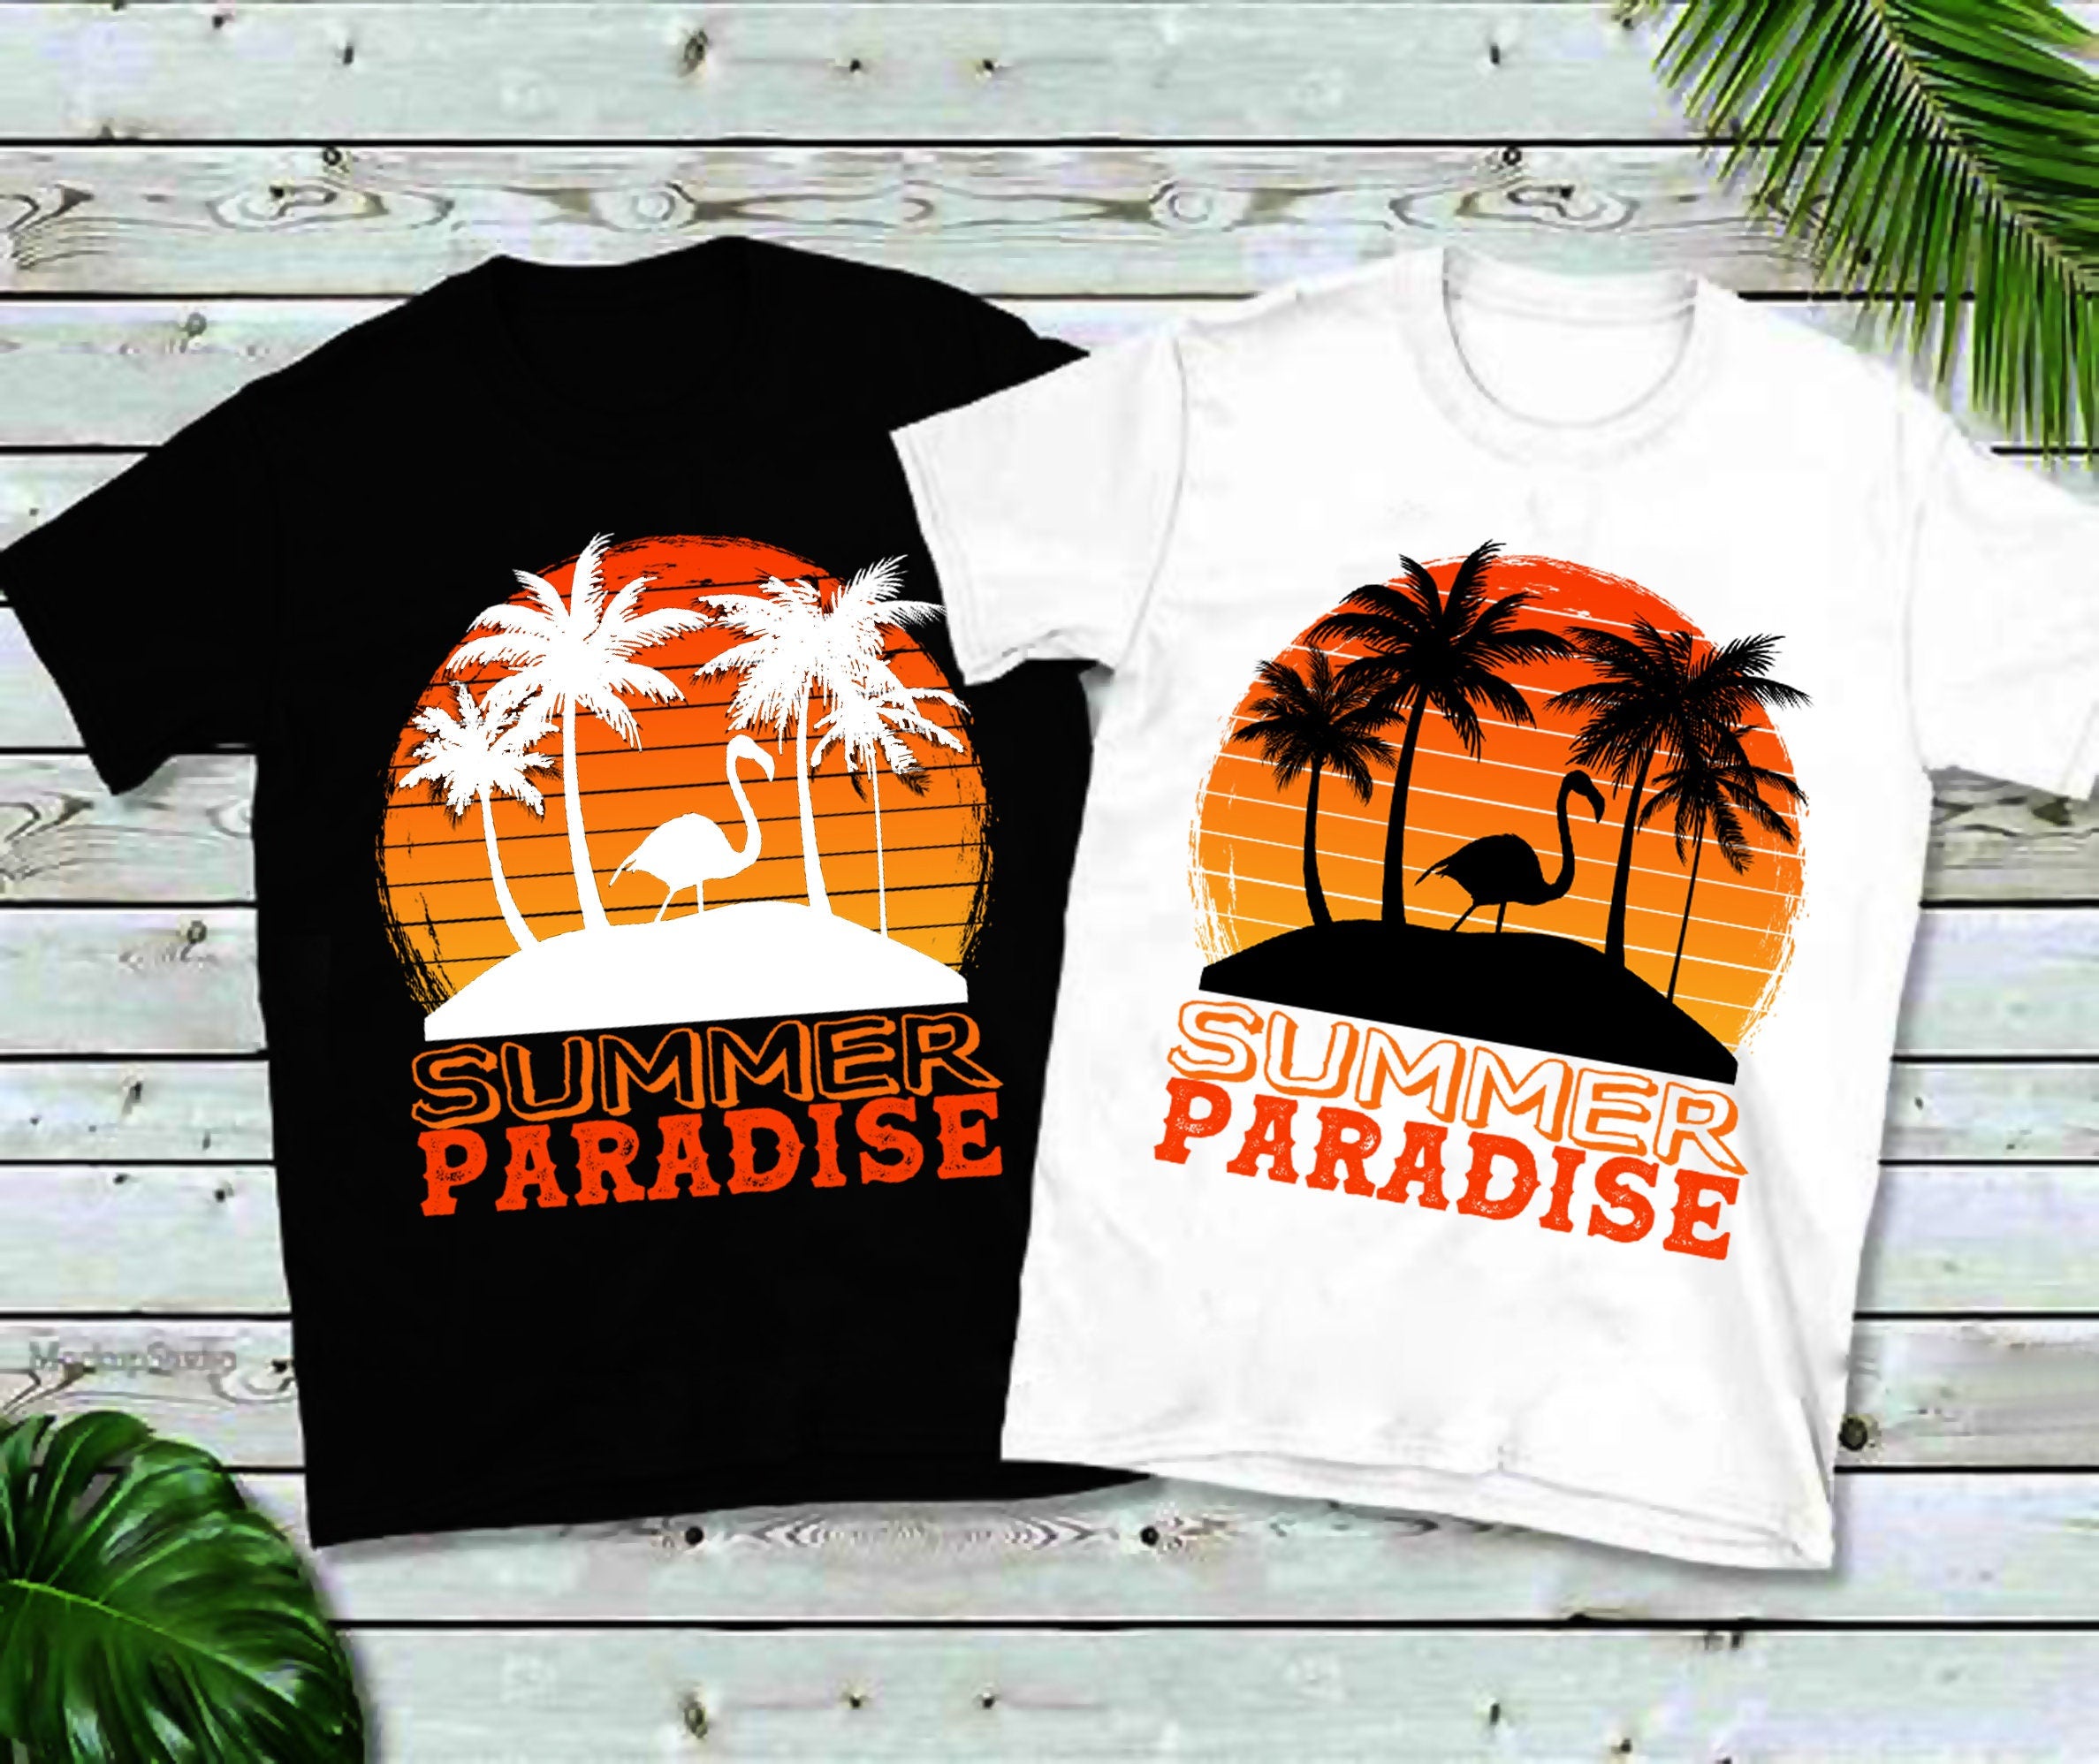 Strand Palmbomen Flamingo | Zomerparadijs | Retro T-shirts bij zonsondergang, T-shirts voor het leven op het eiland | Zomershirt | Vakantieshirt - plusminusco.com